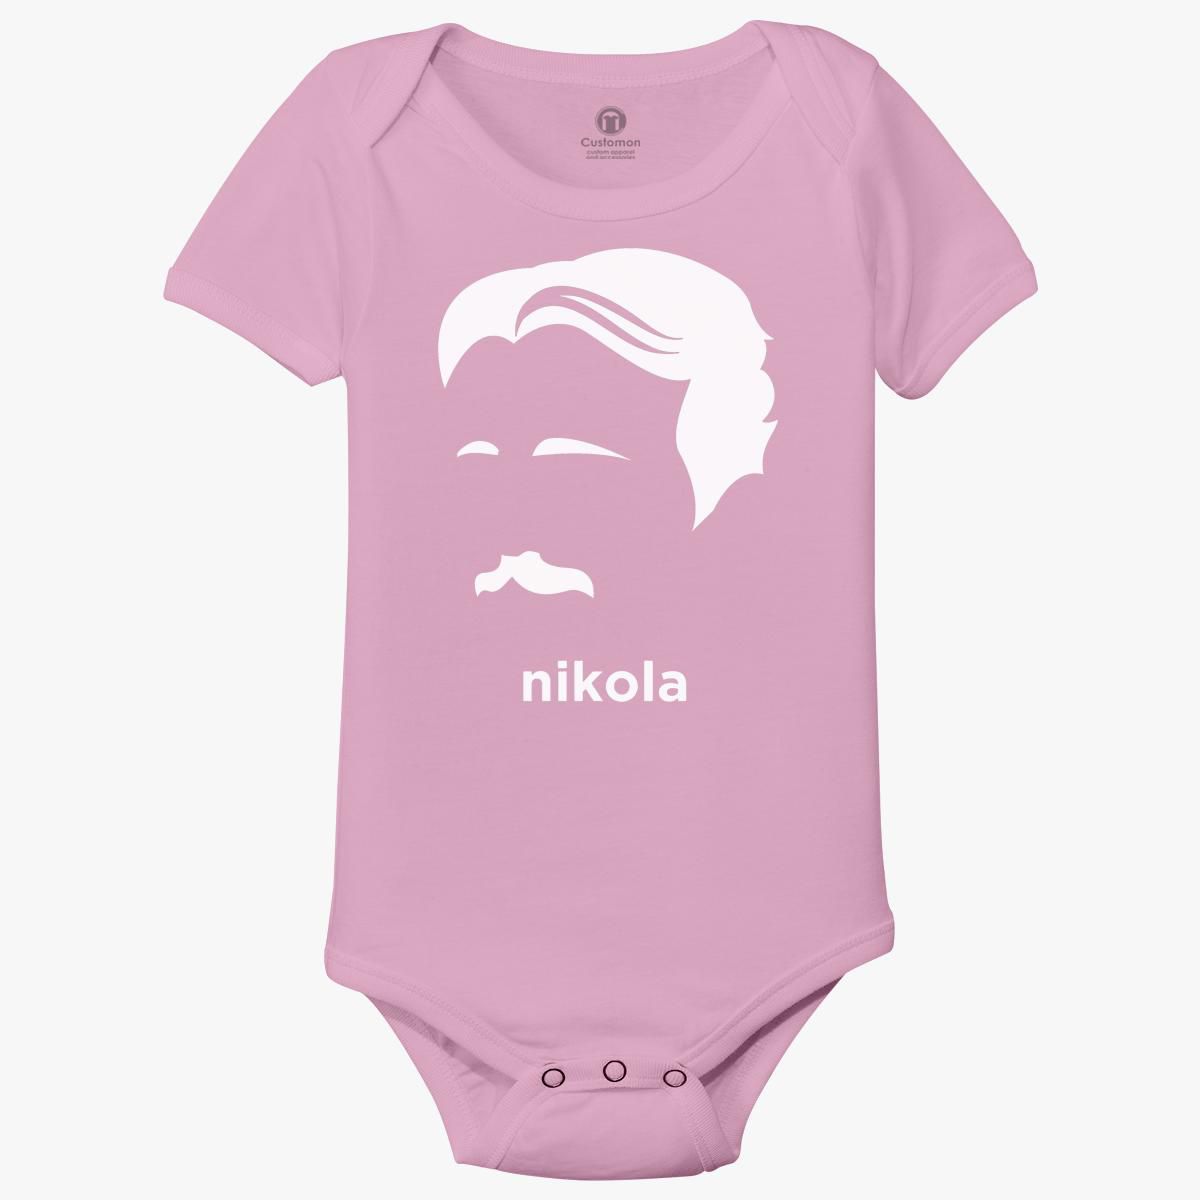 nikola tesla baby onesies color=31&size=20